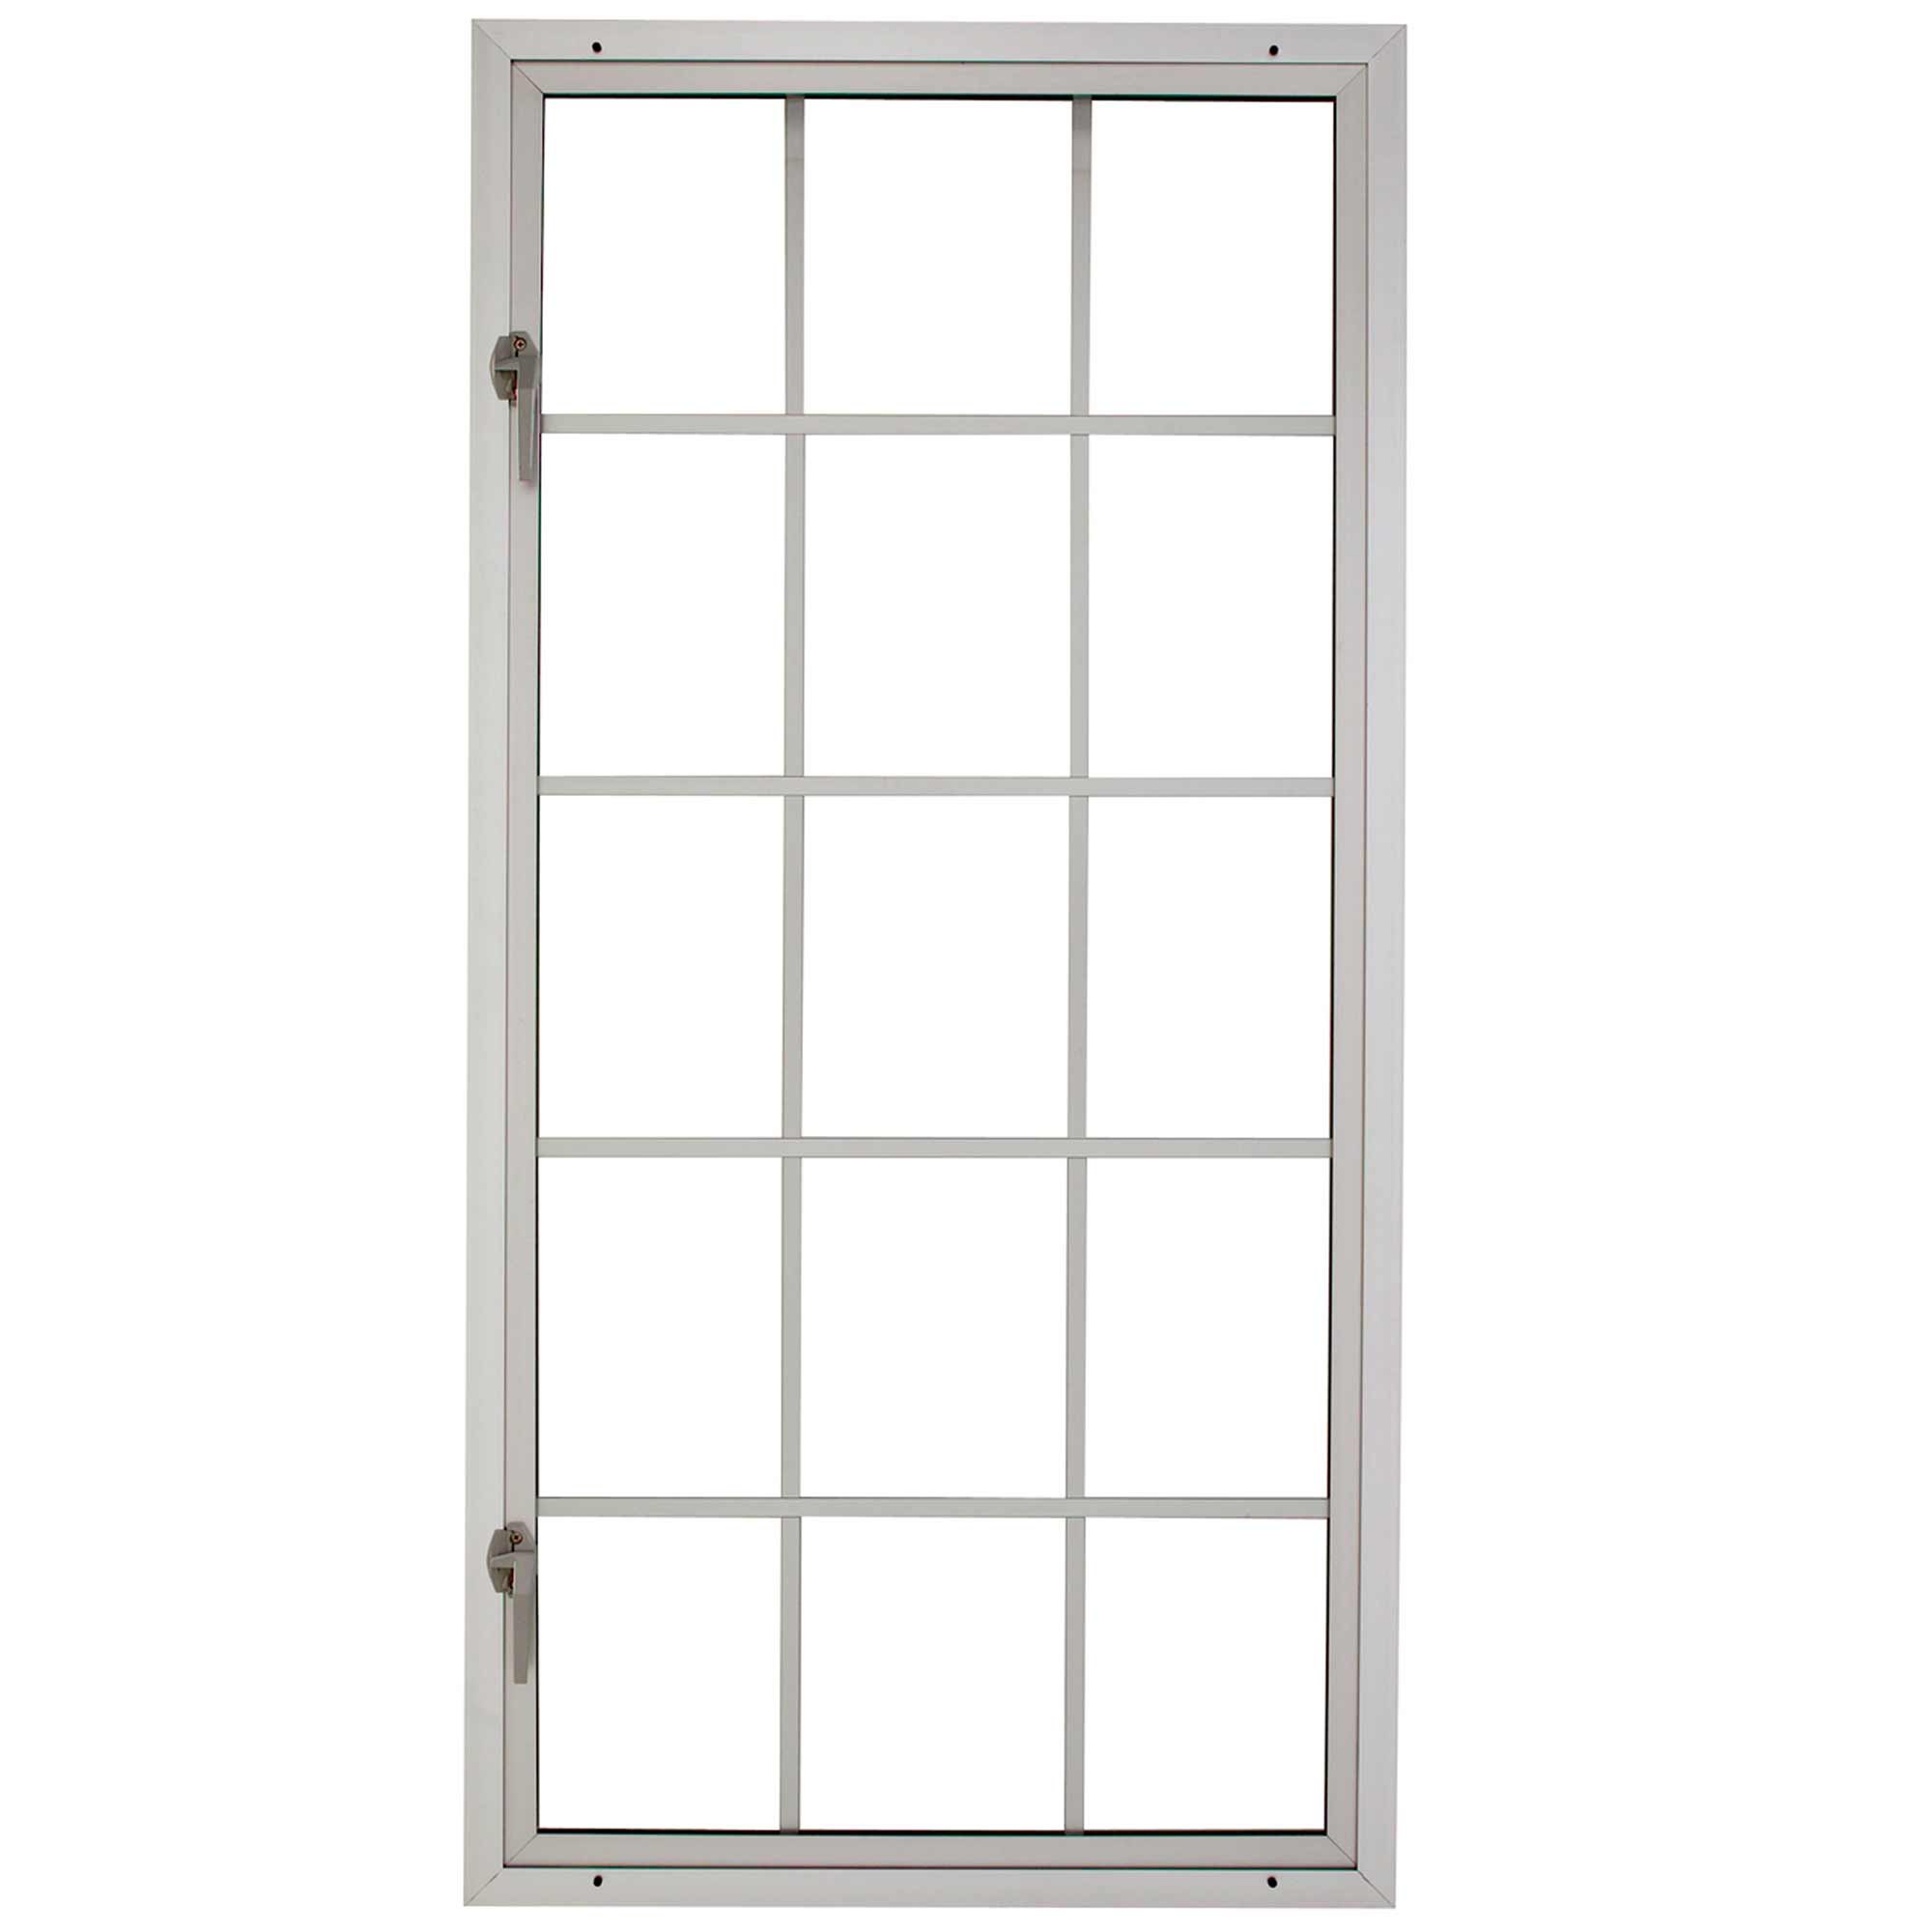 Milgard contemporary aluminum windows for open casement